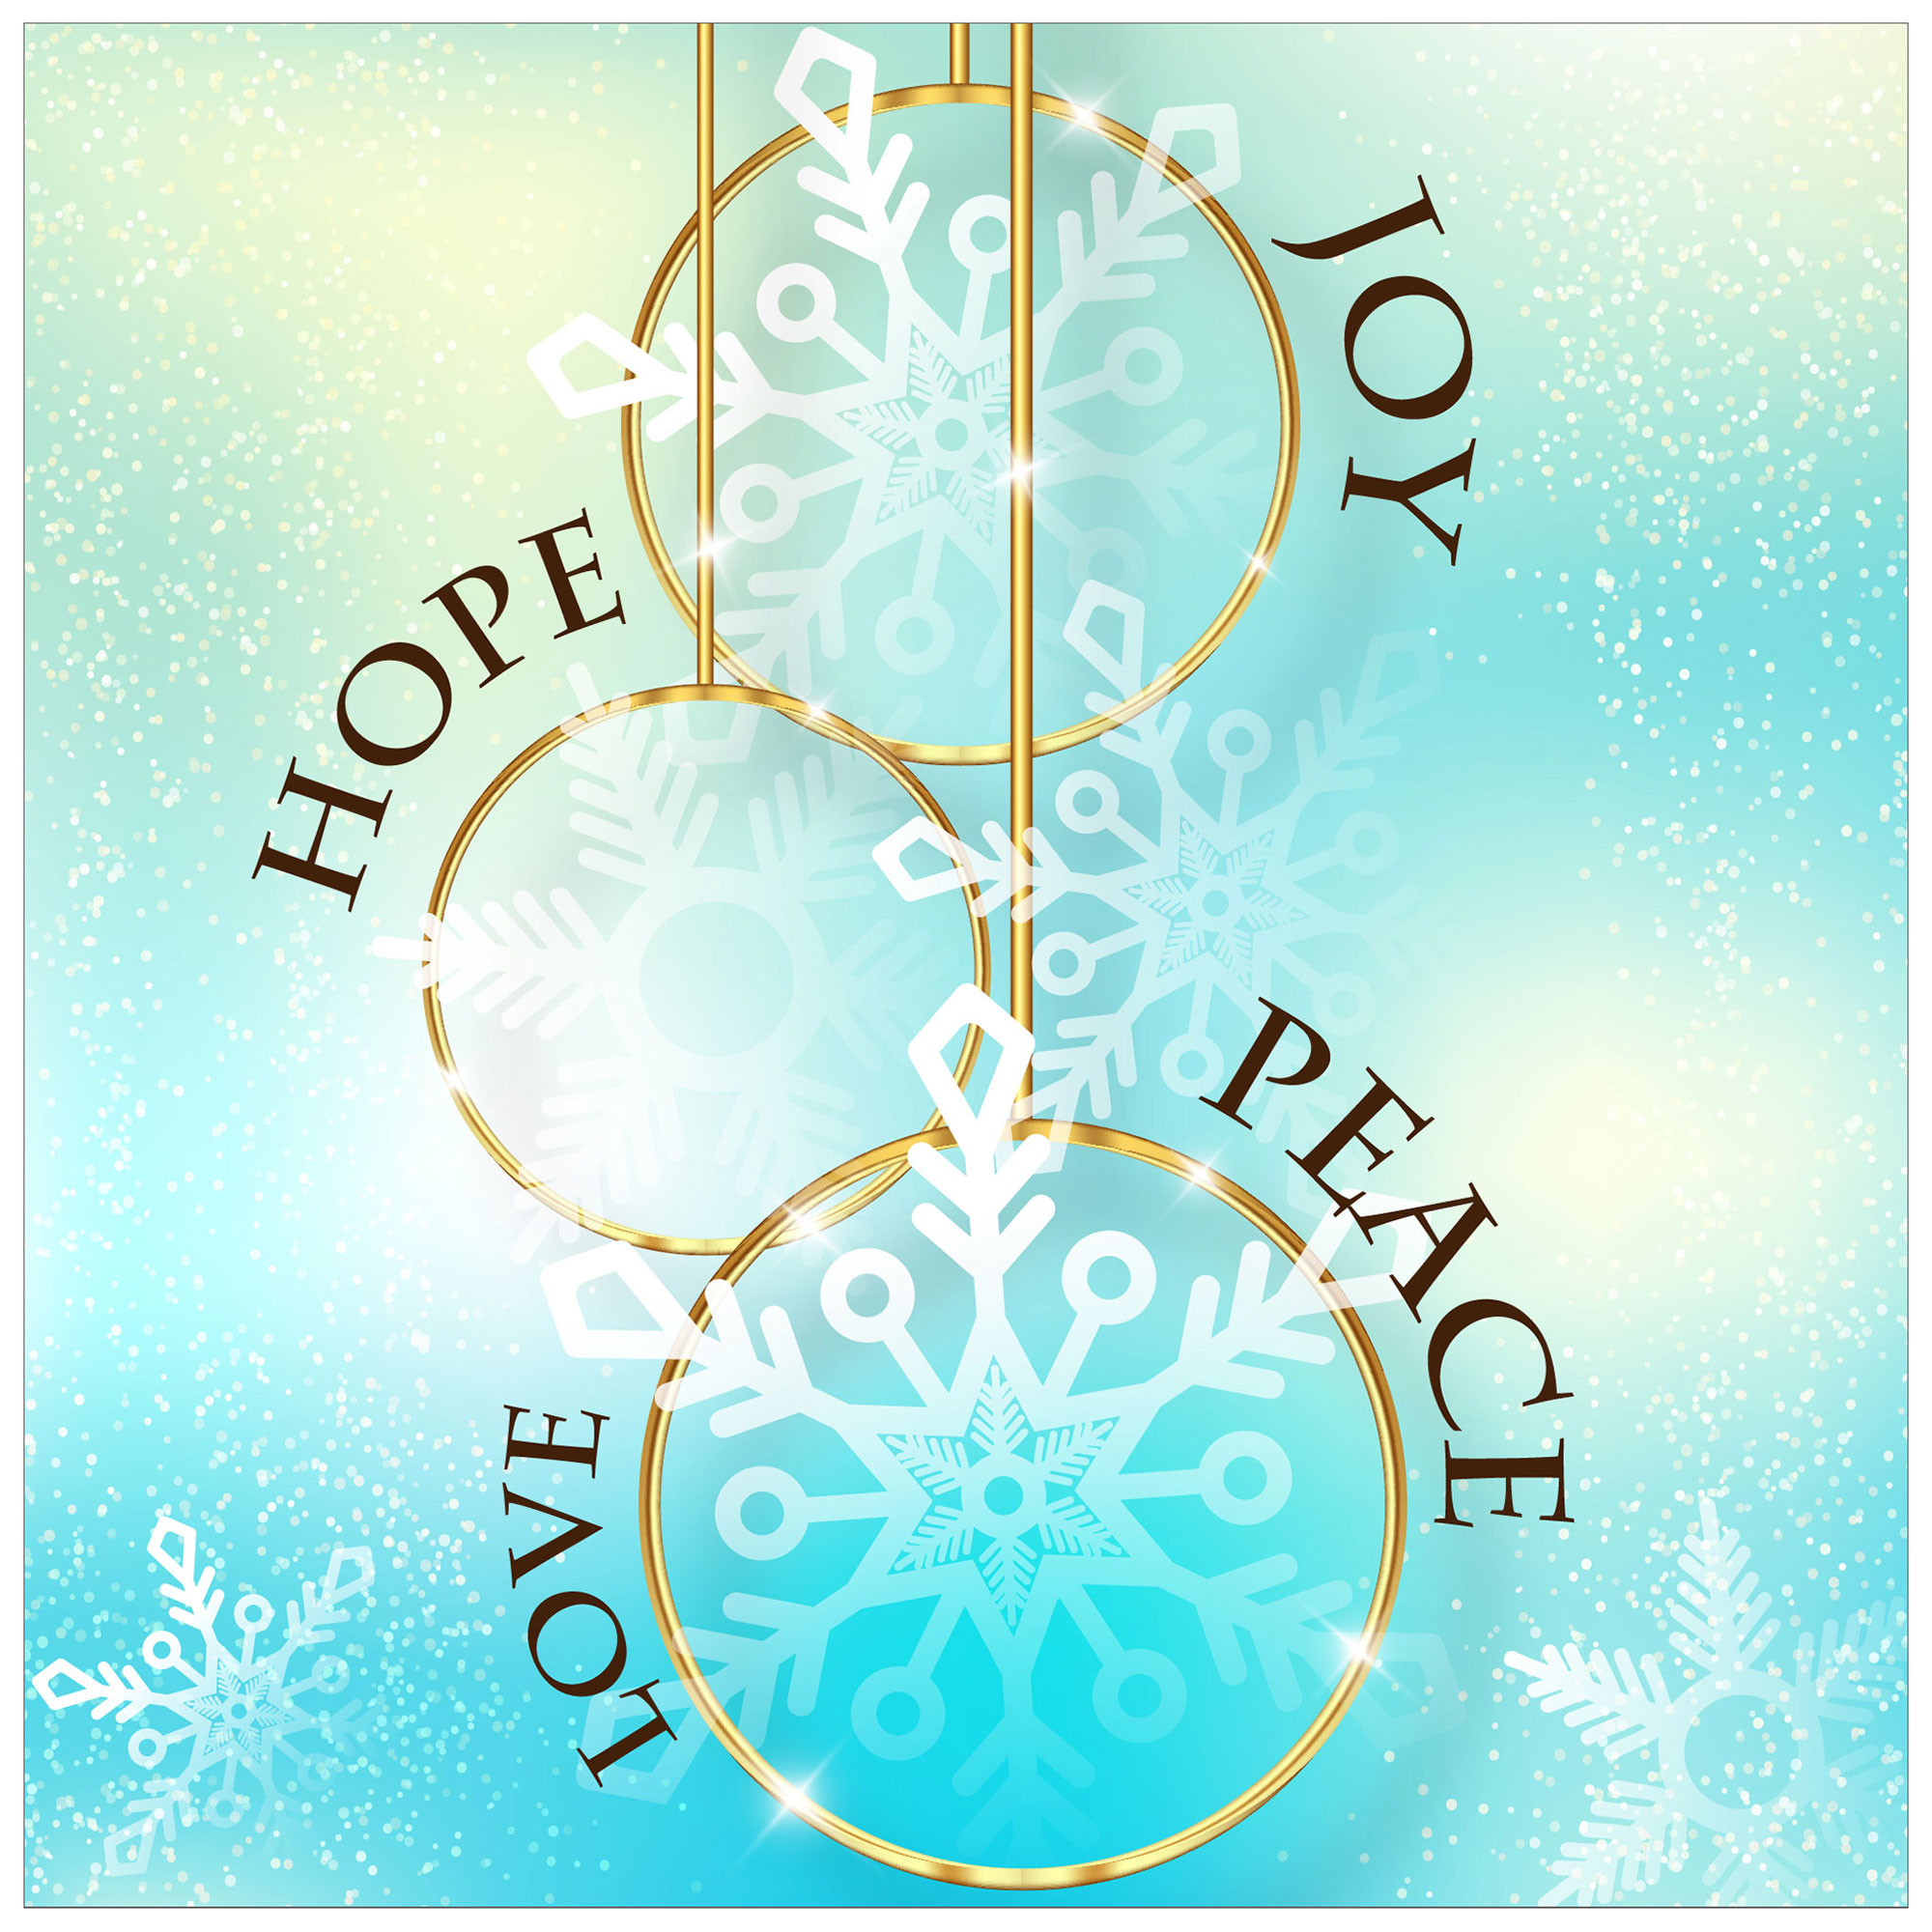 Hope Joy Peace Love snowflake Christmas card